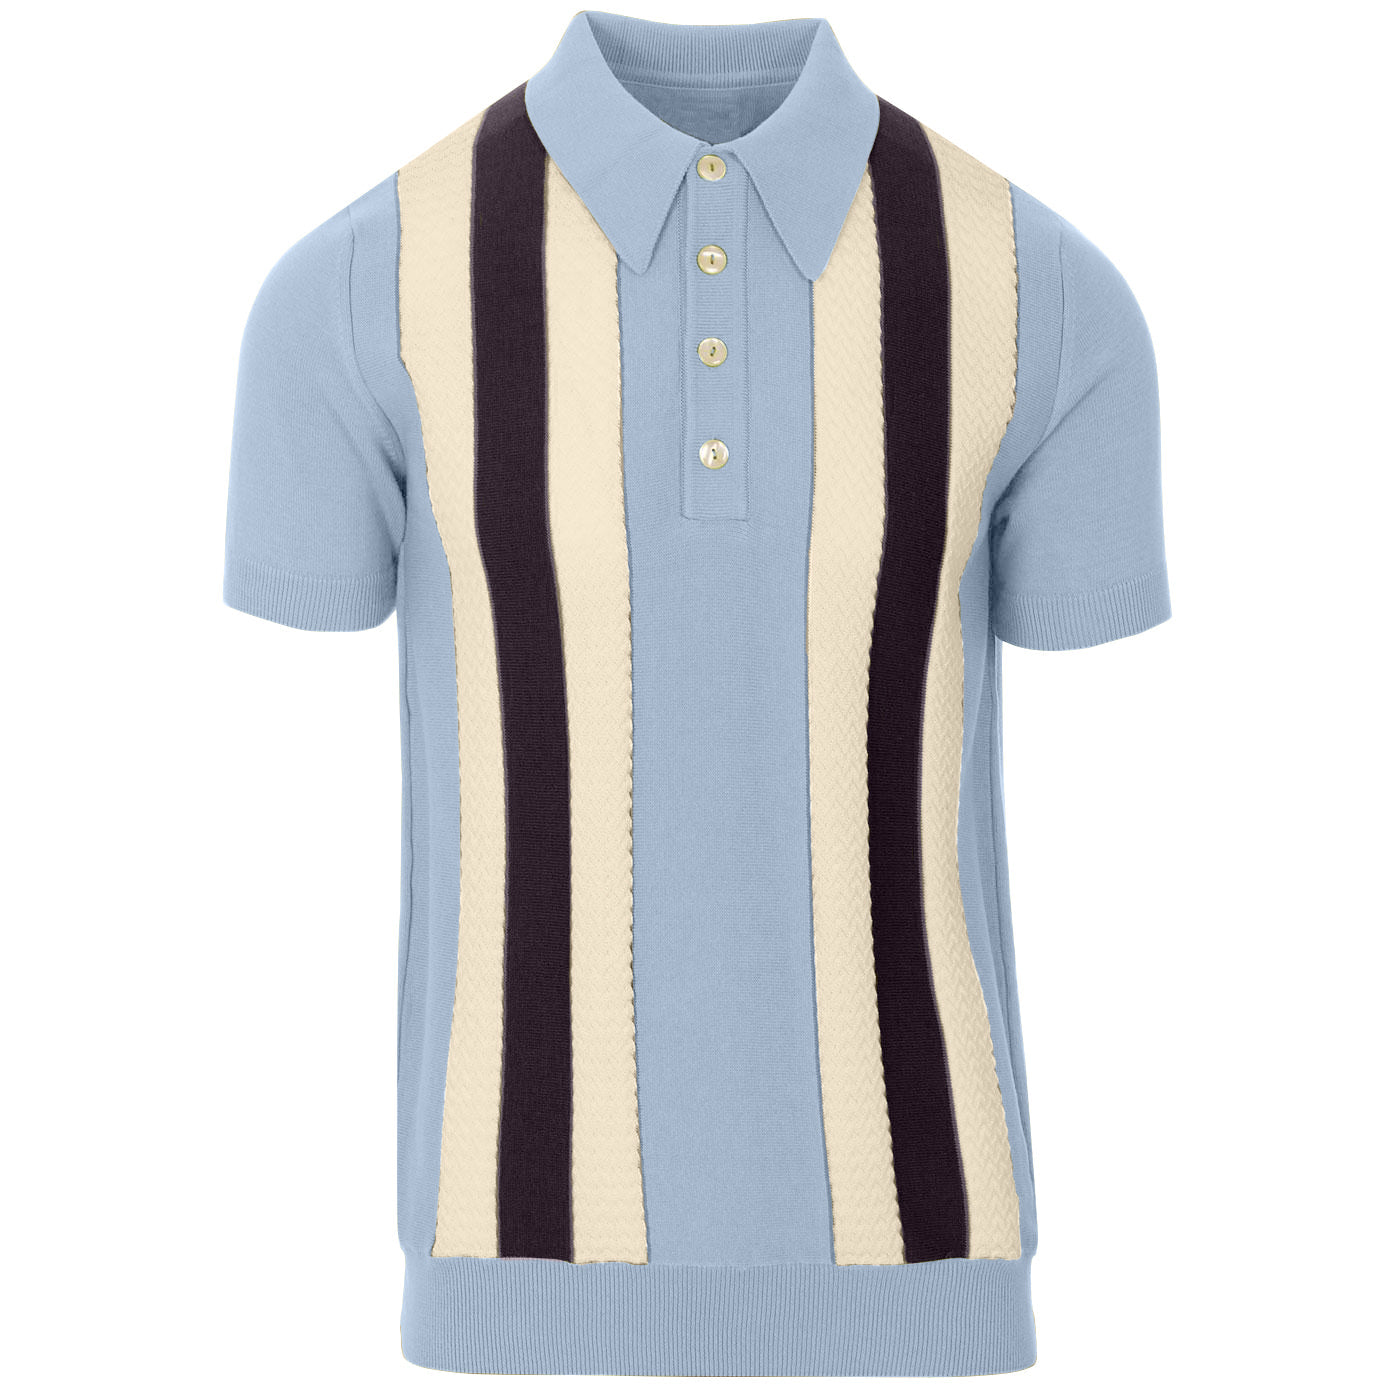 OXKNIT Men Vintage Clothing 1960s Mod Style Casual Stripe Blue Knit ...